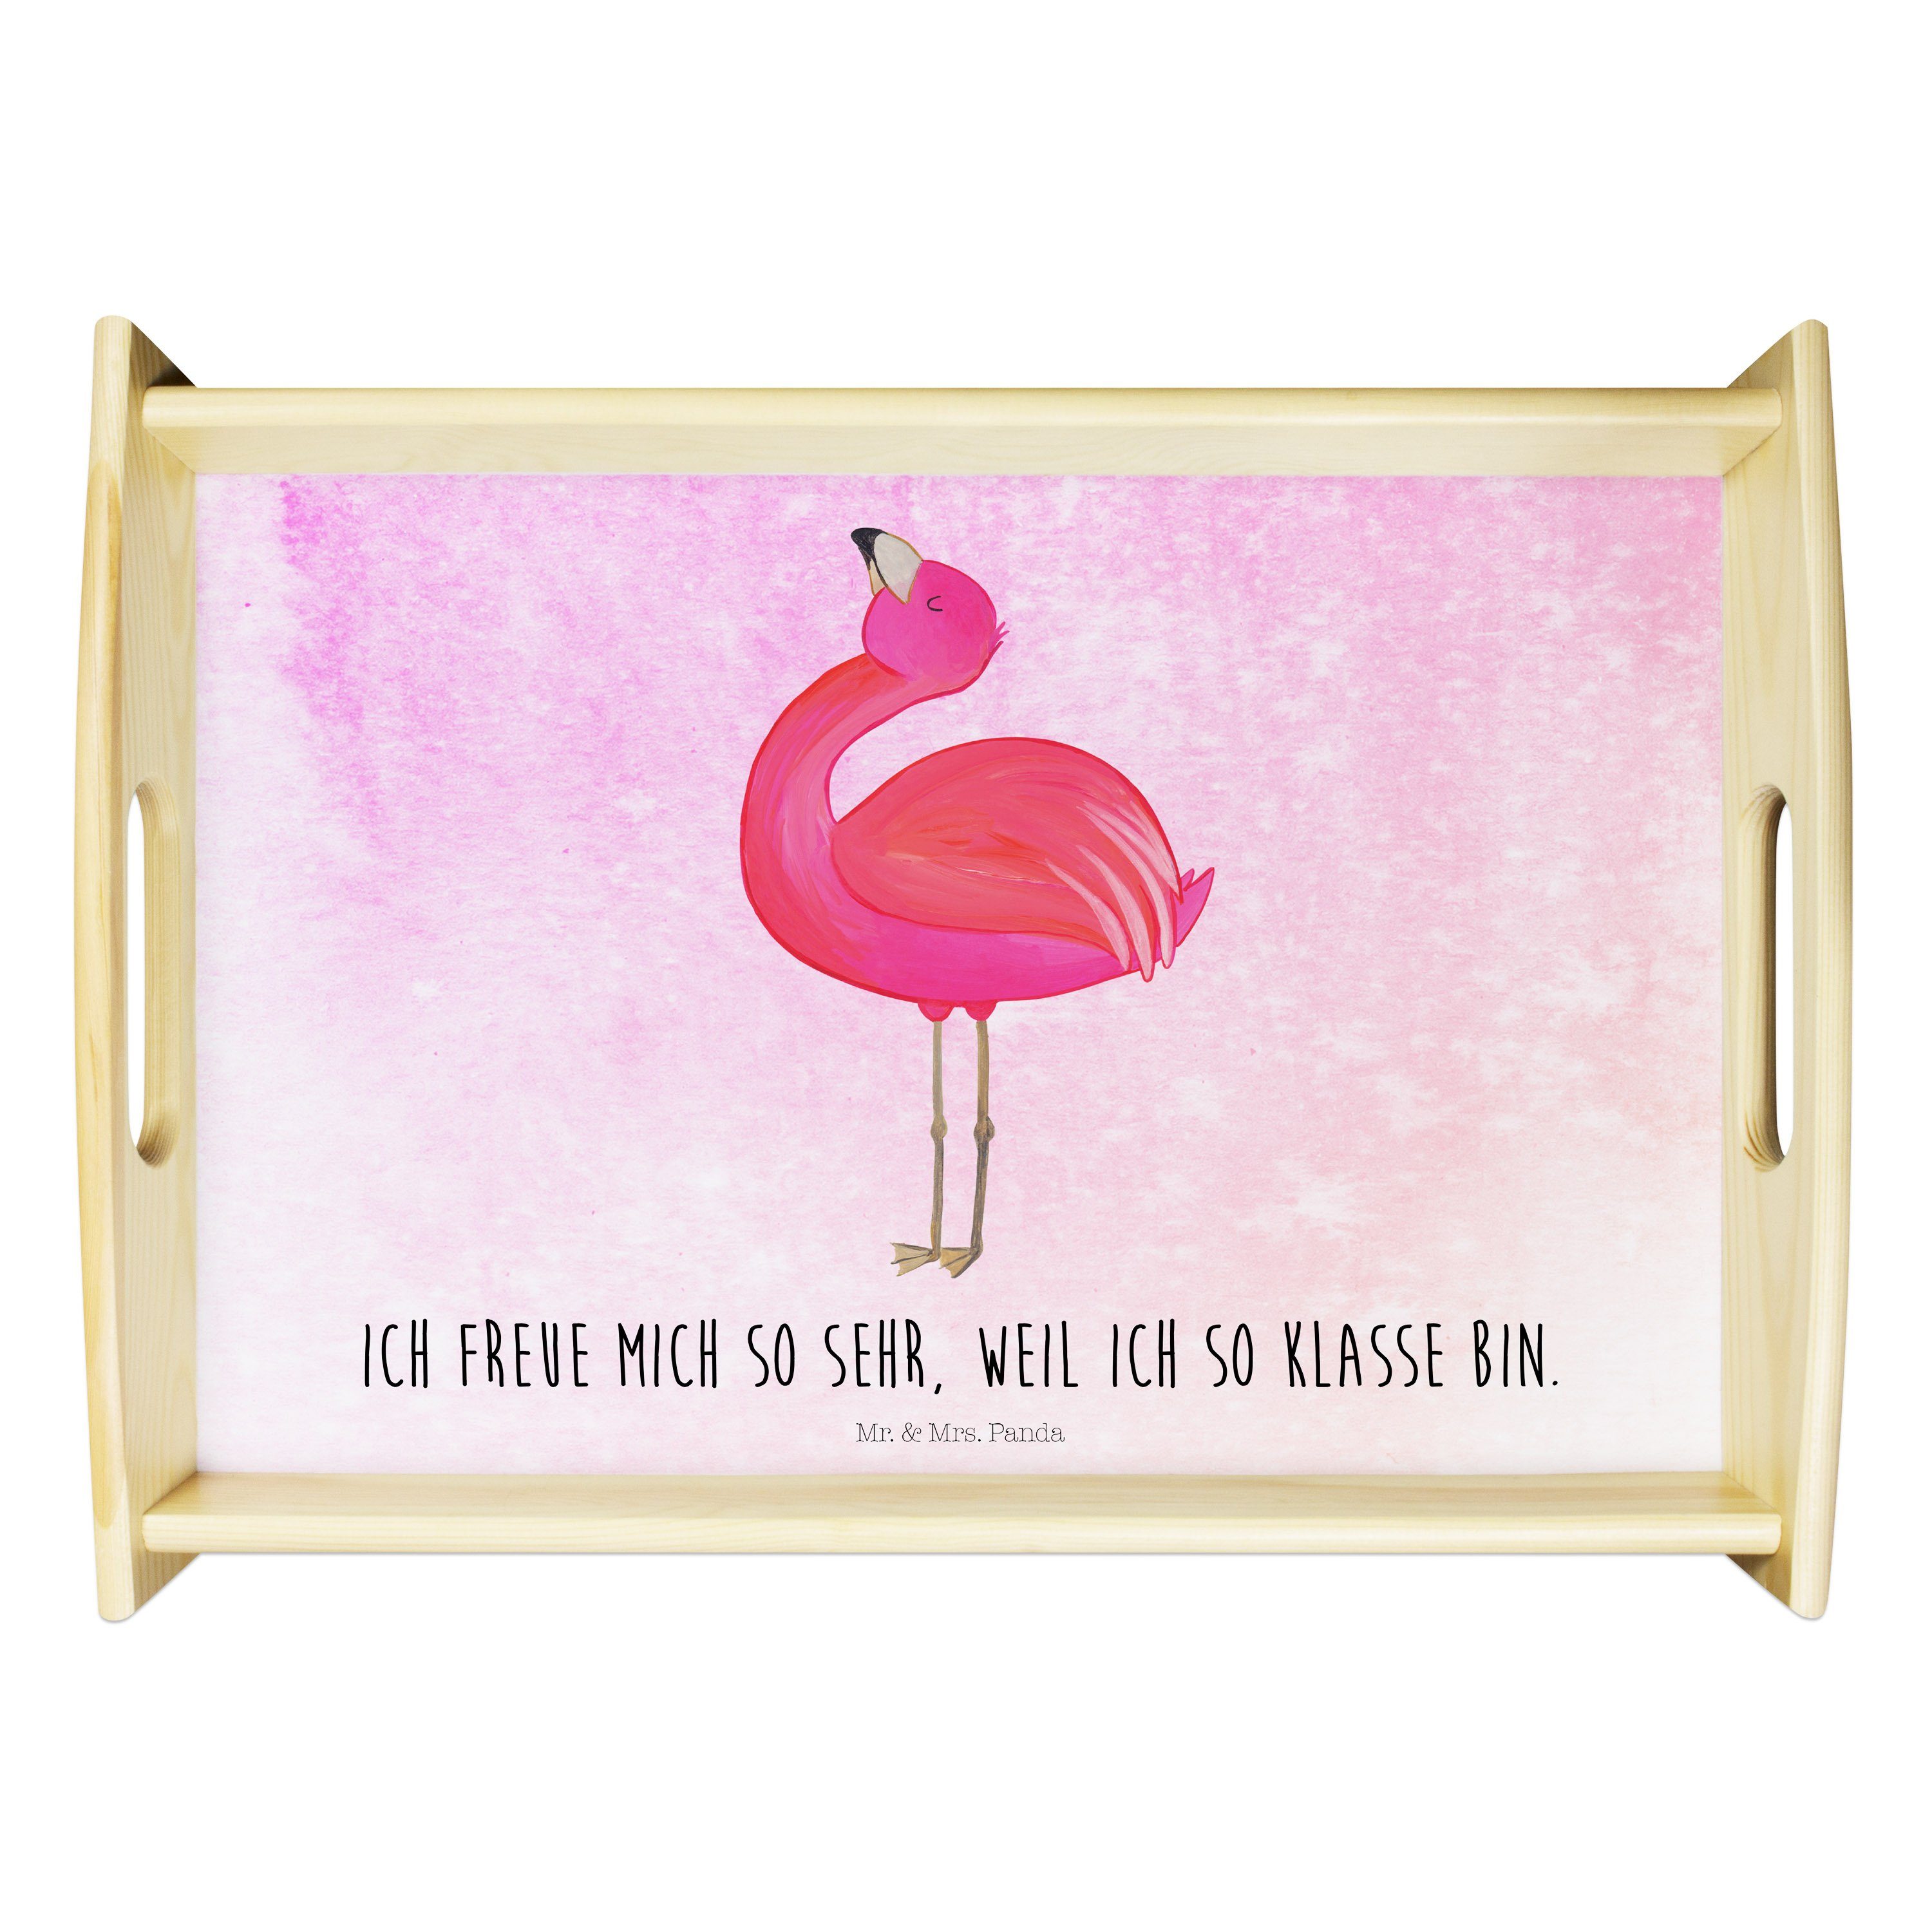 Mr. & Mrs. stolz Geschenk, Küchentablett, Panda Flamingo - Holztablett, - (1-tlg) Echtholz Aquarell Pink Tablett lasiert